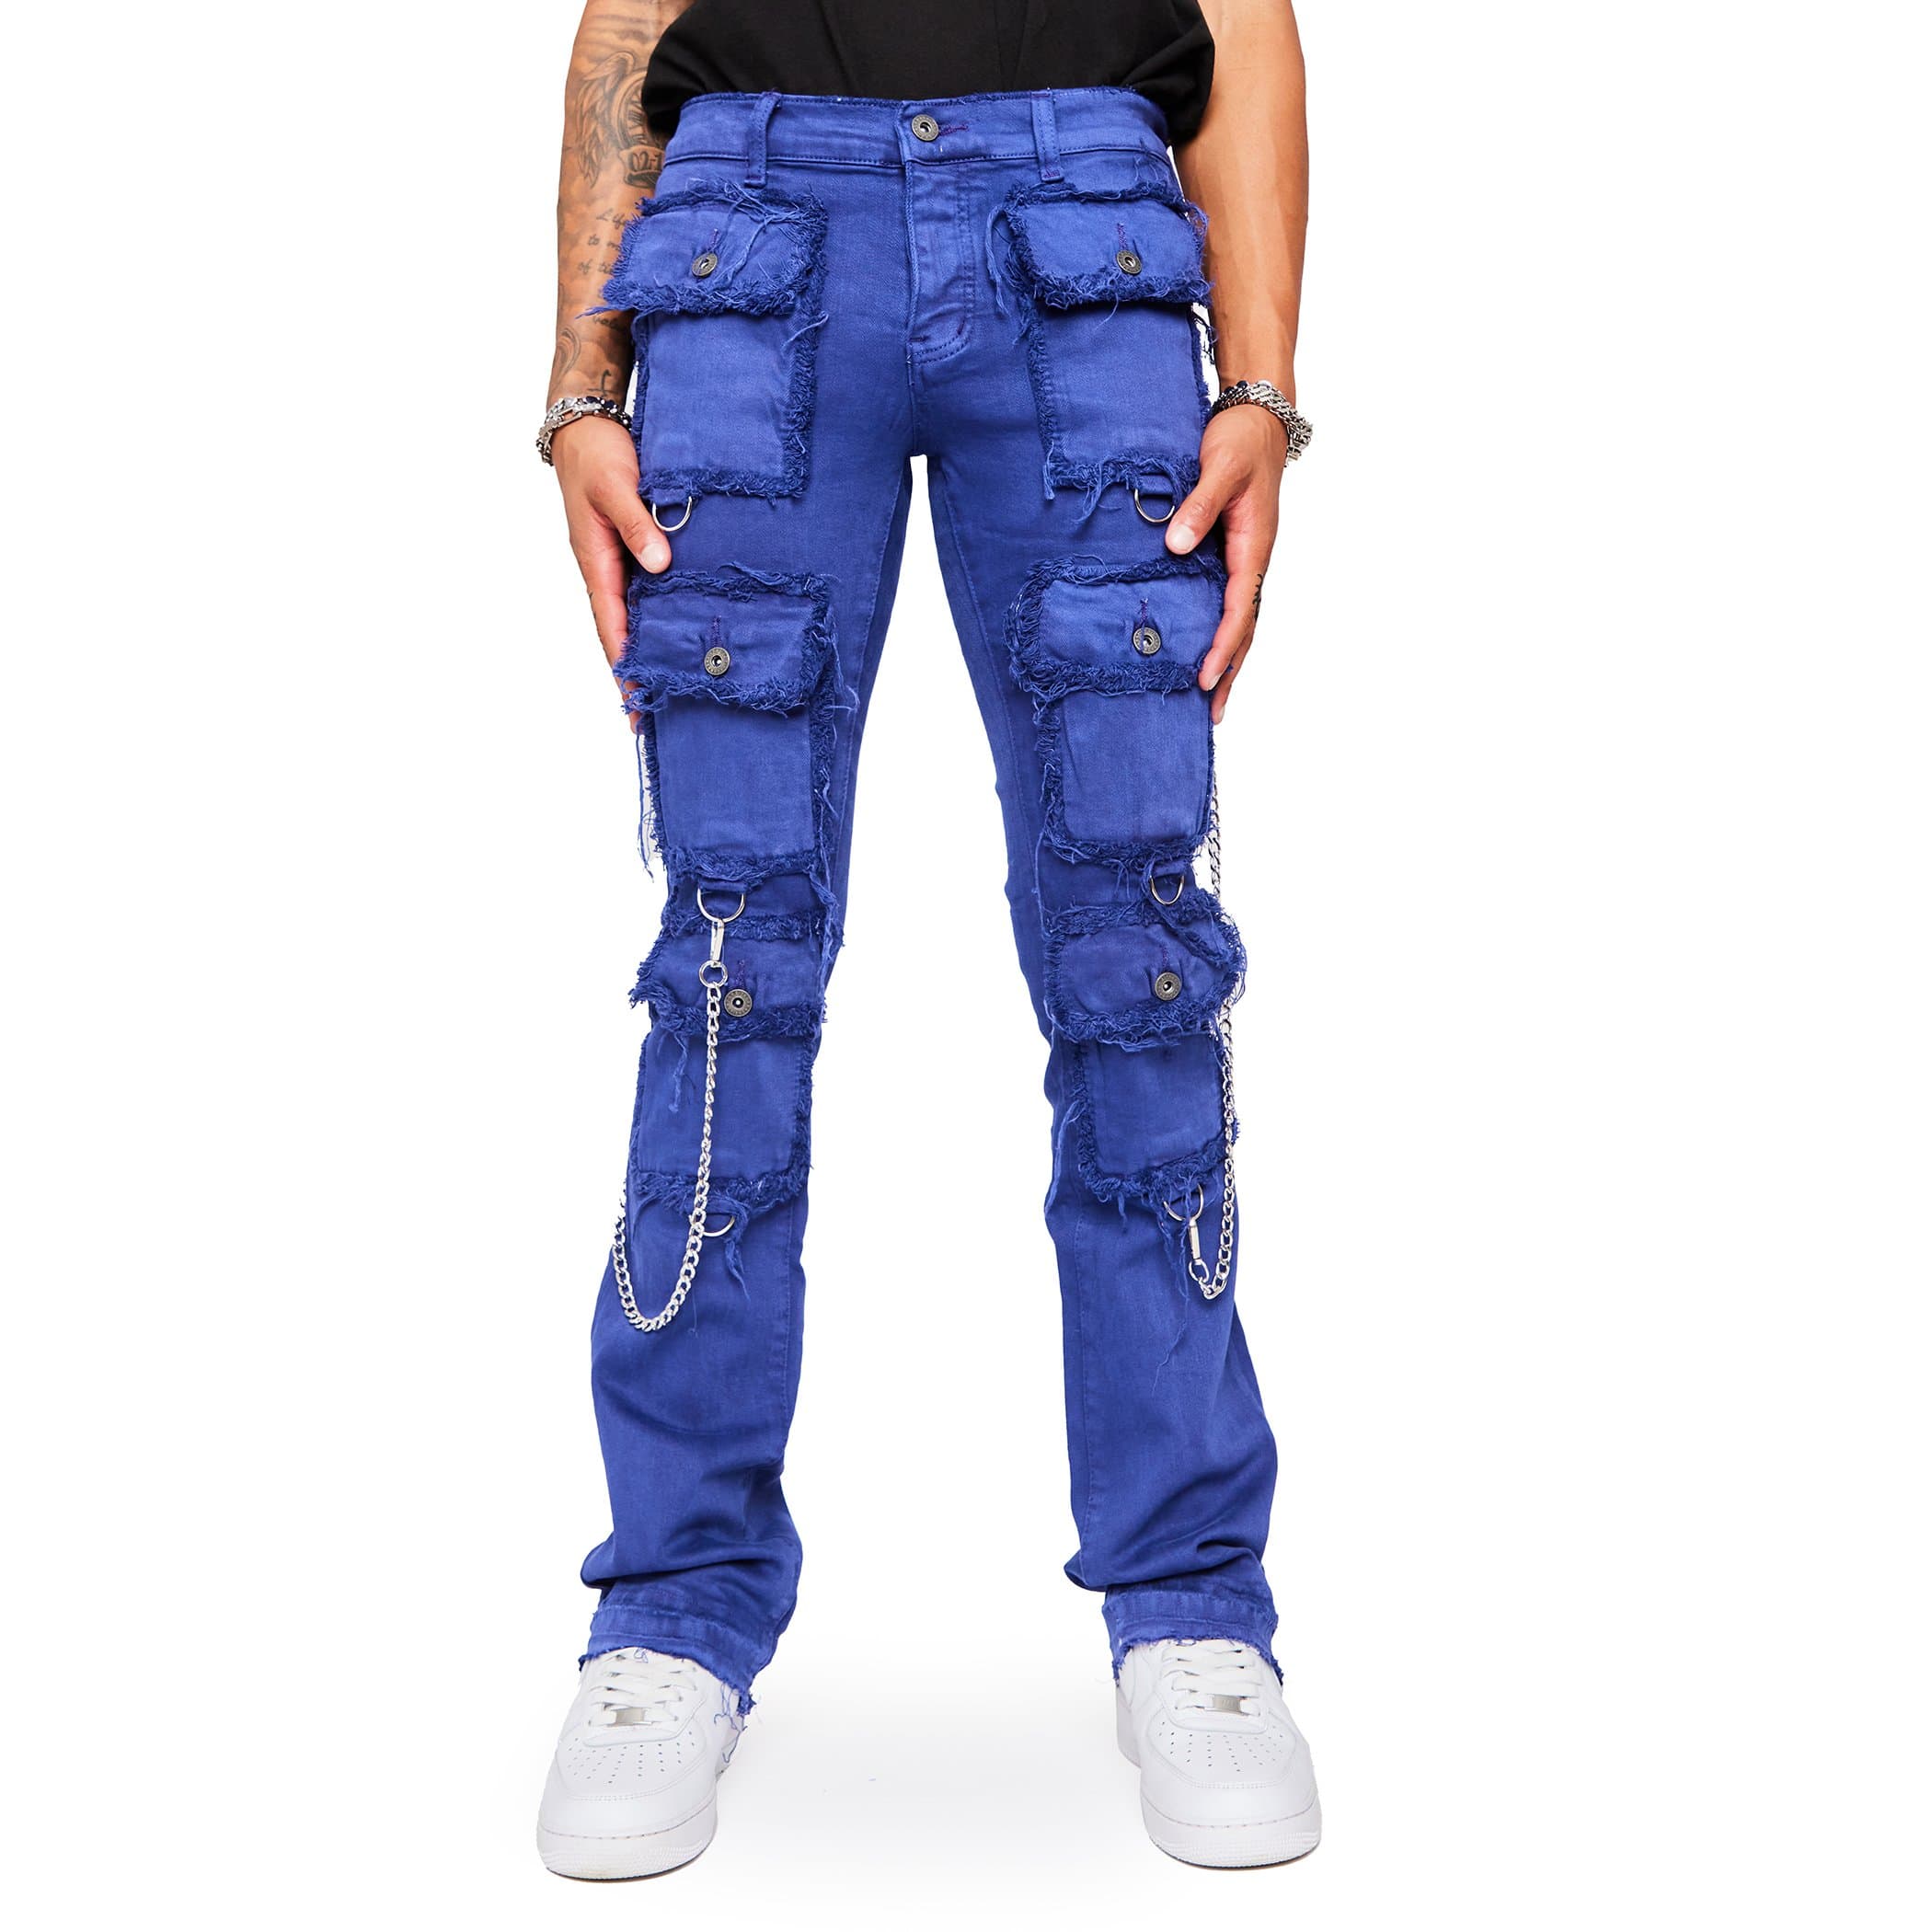 VALABASAS BANDA stacked jeans ジーンズ デニム www